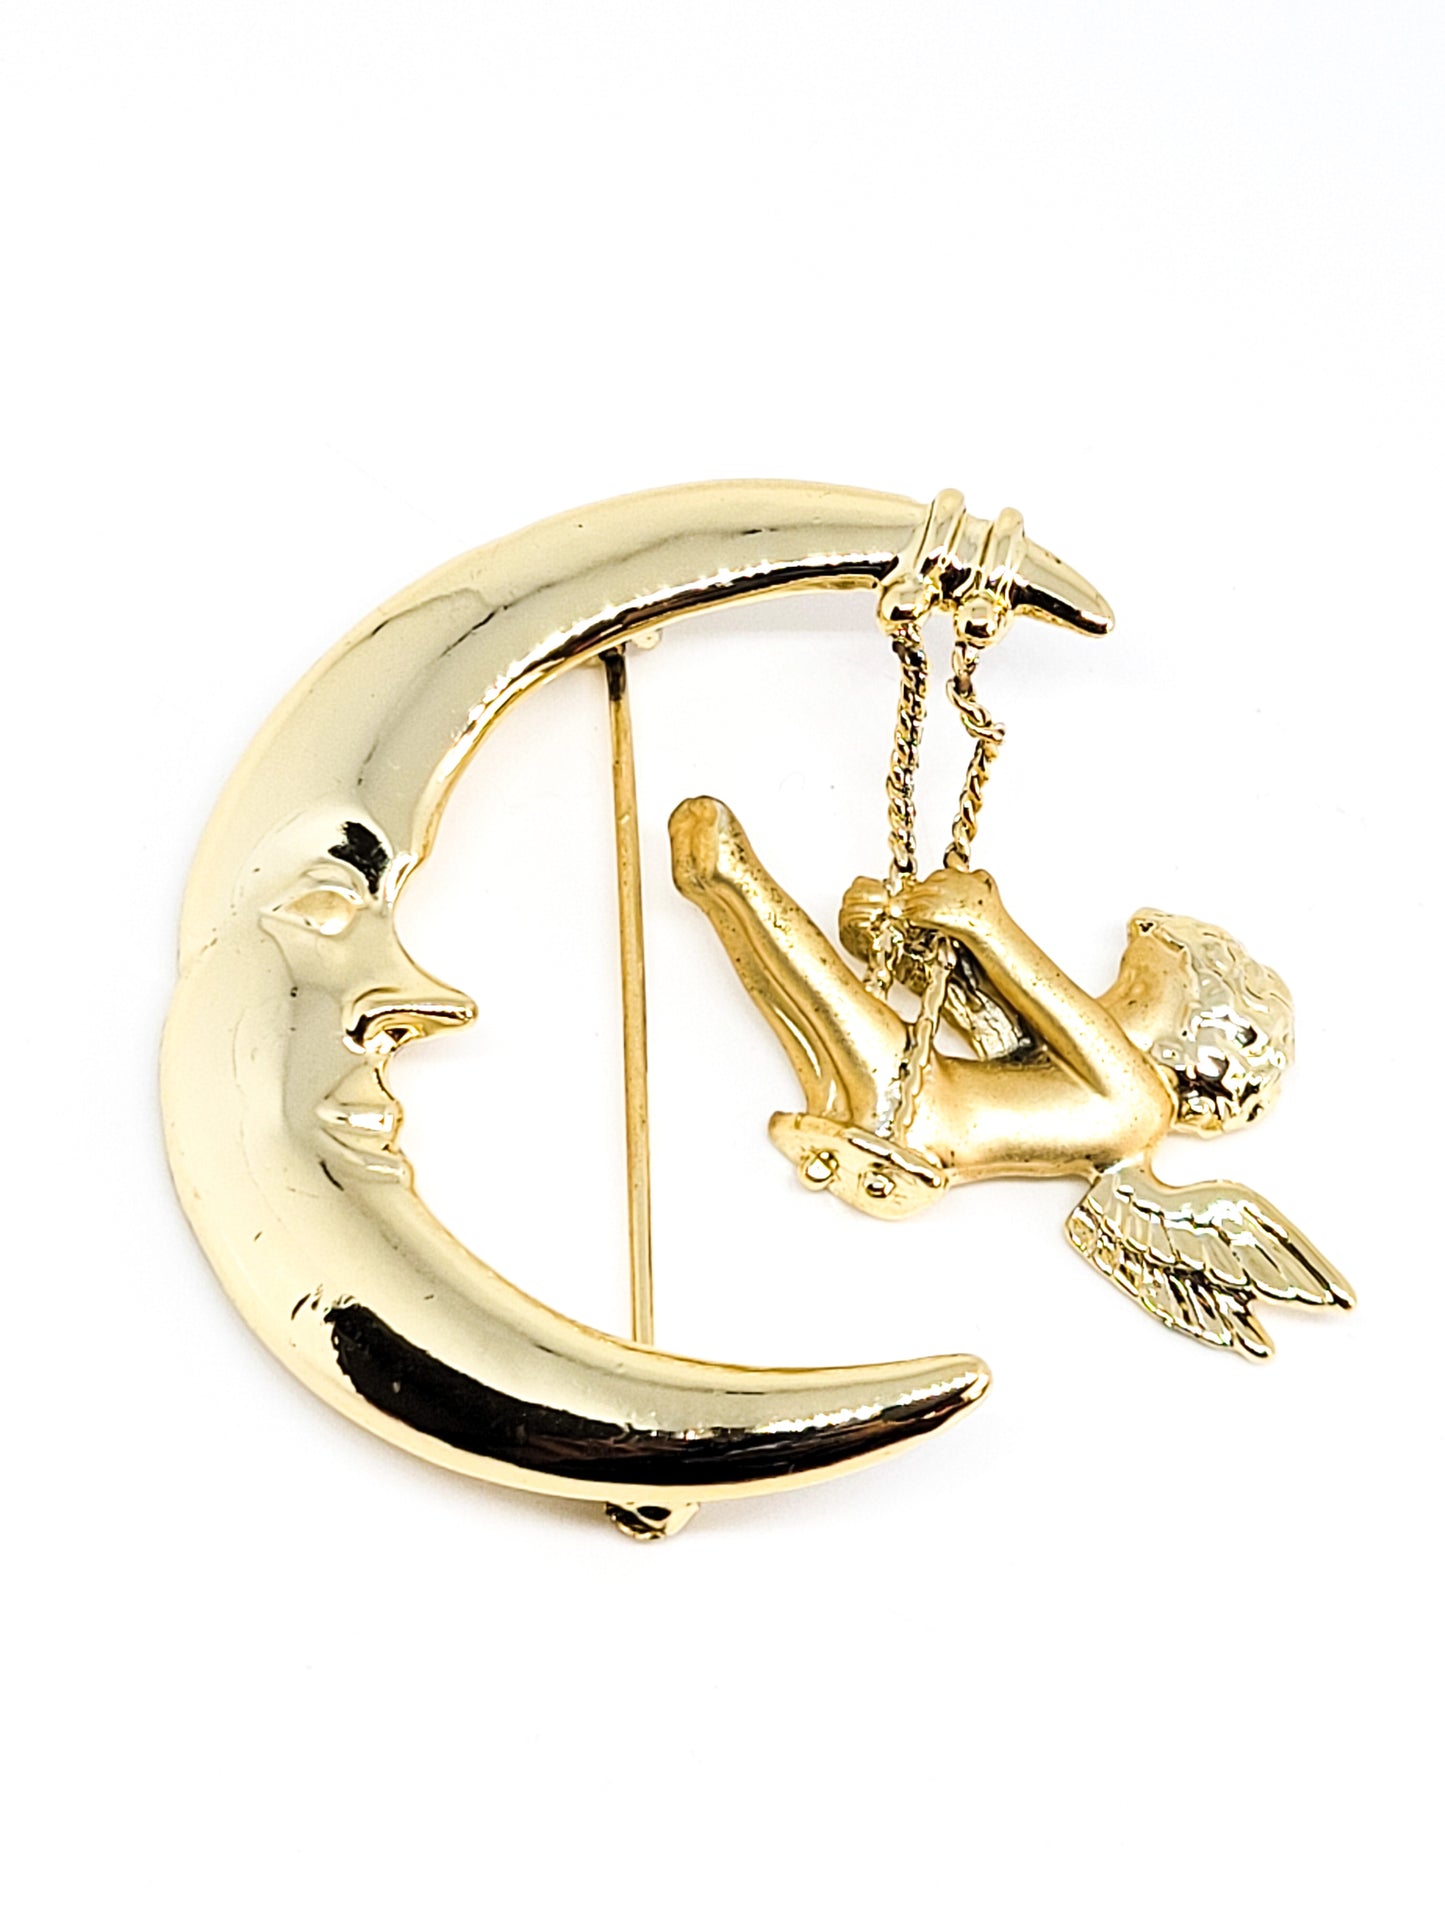 AJC Crescent moon cherub swinging angel gold toned vintage brooch